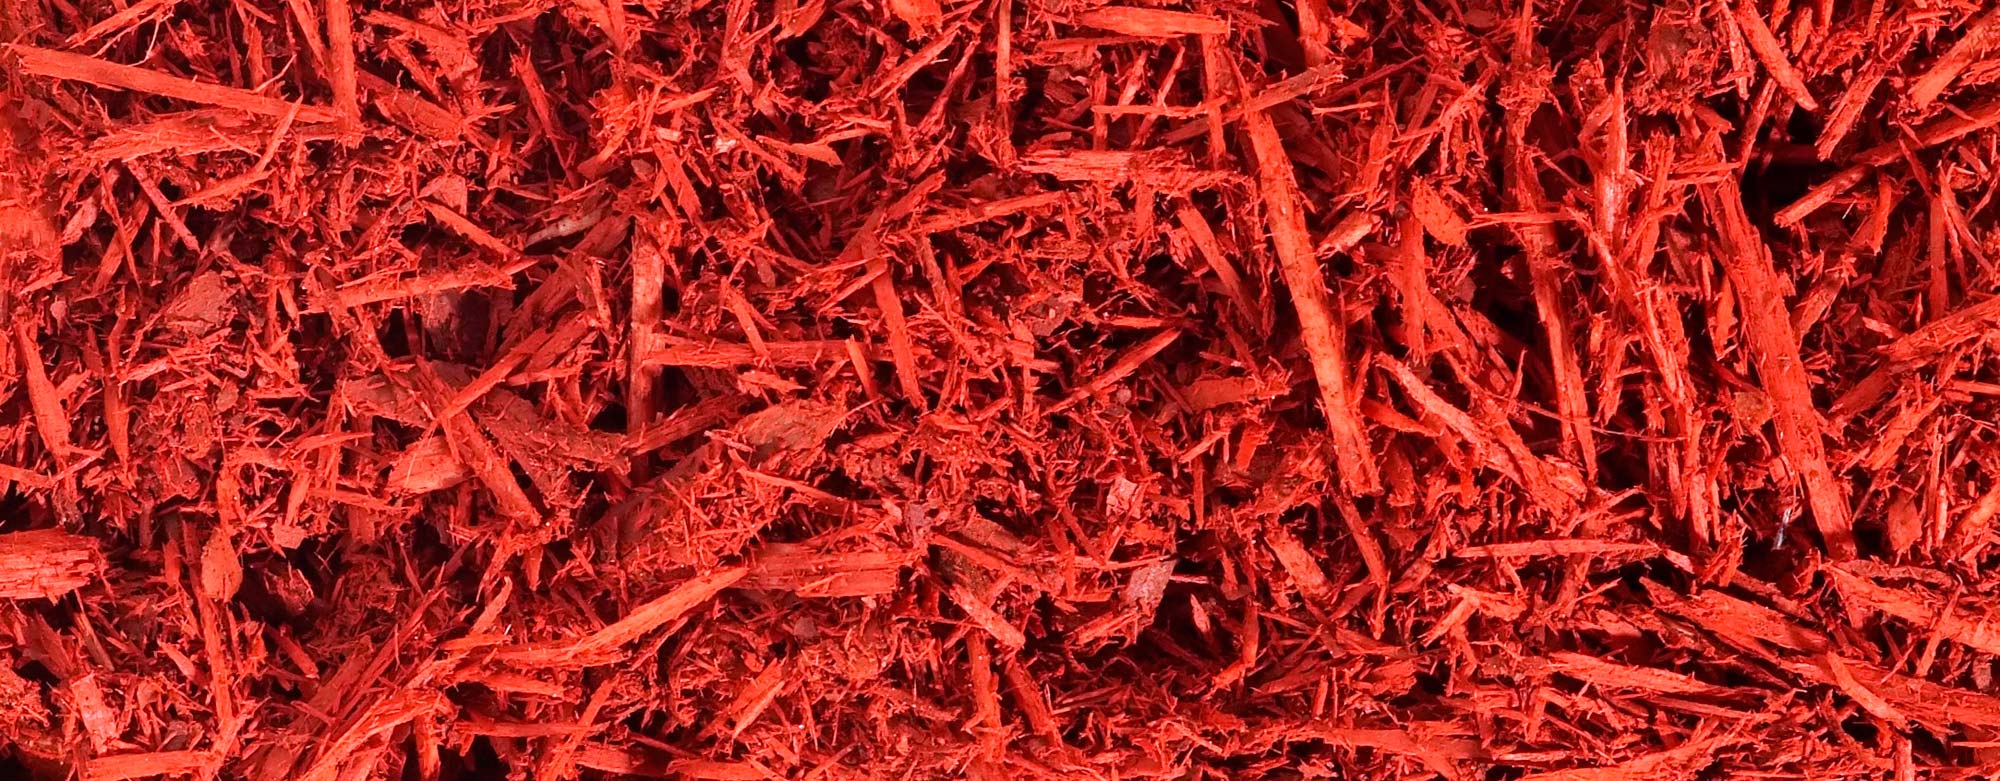 red-devil-mulch